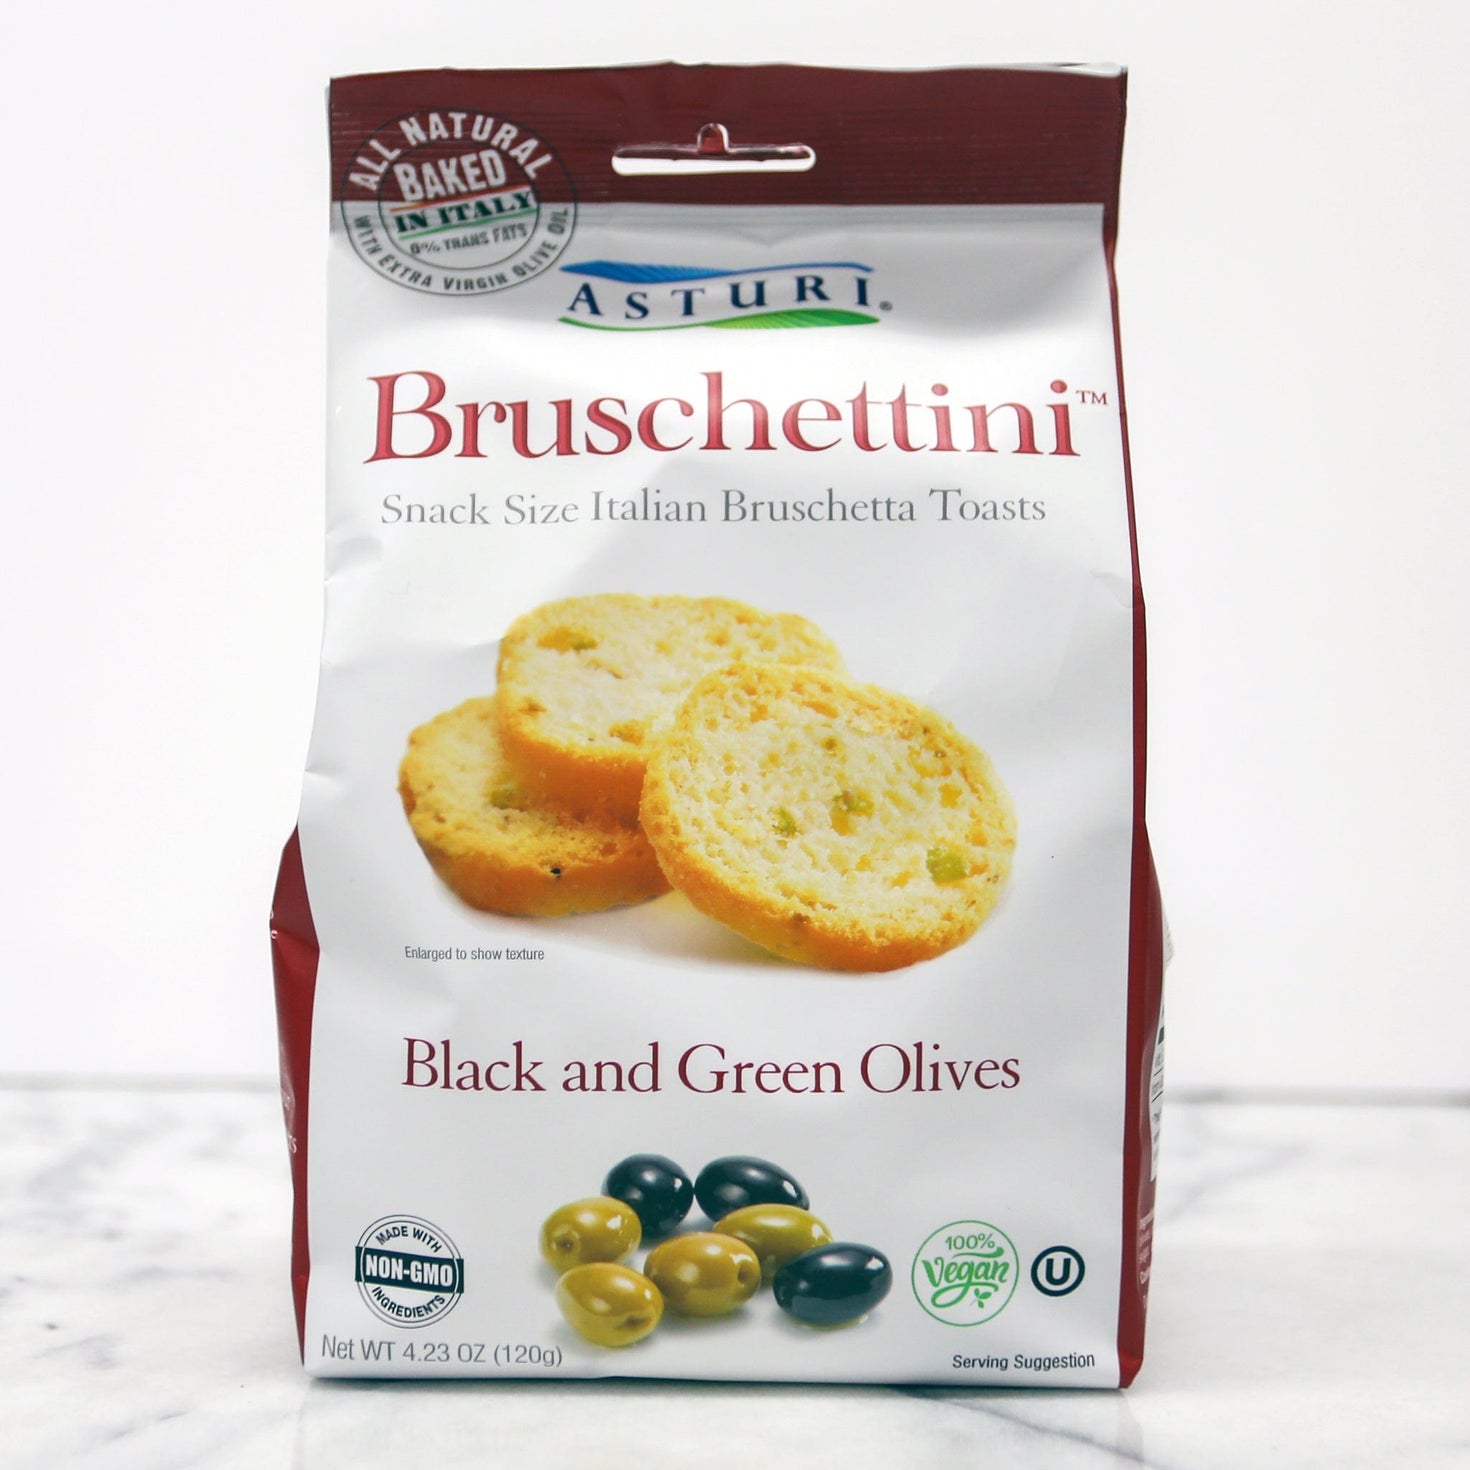 Asturi - Bruschettini - Black and Green Olives 4.23oz